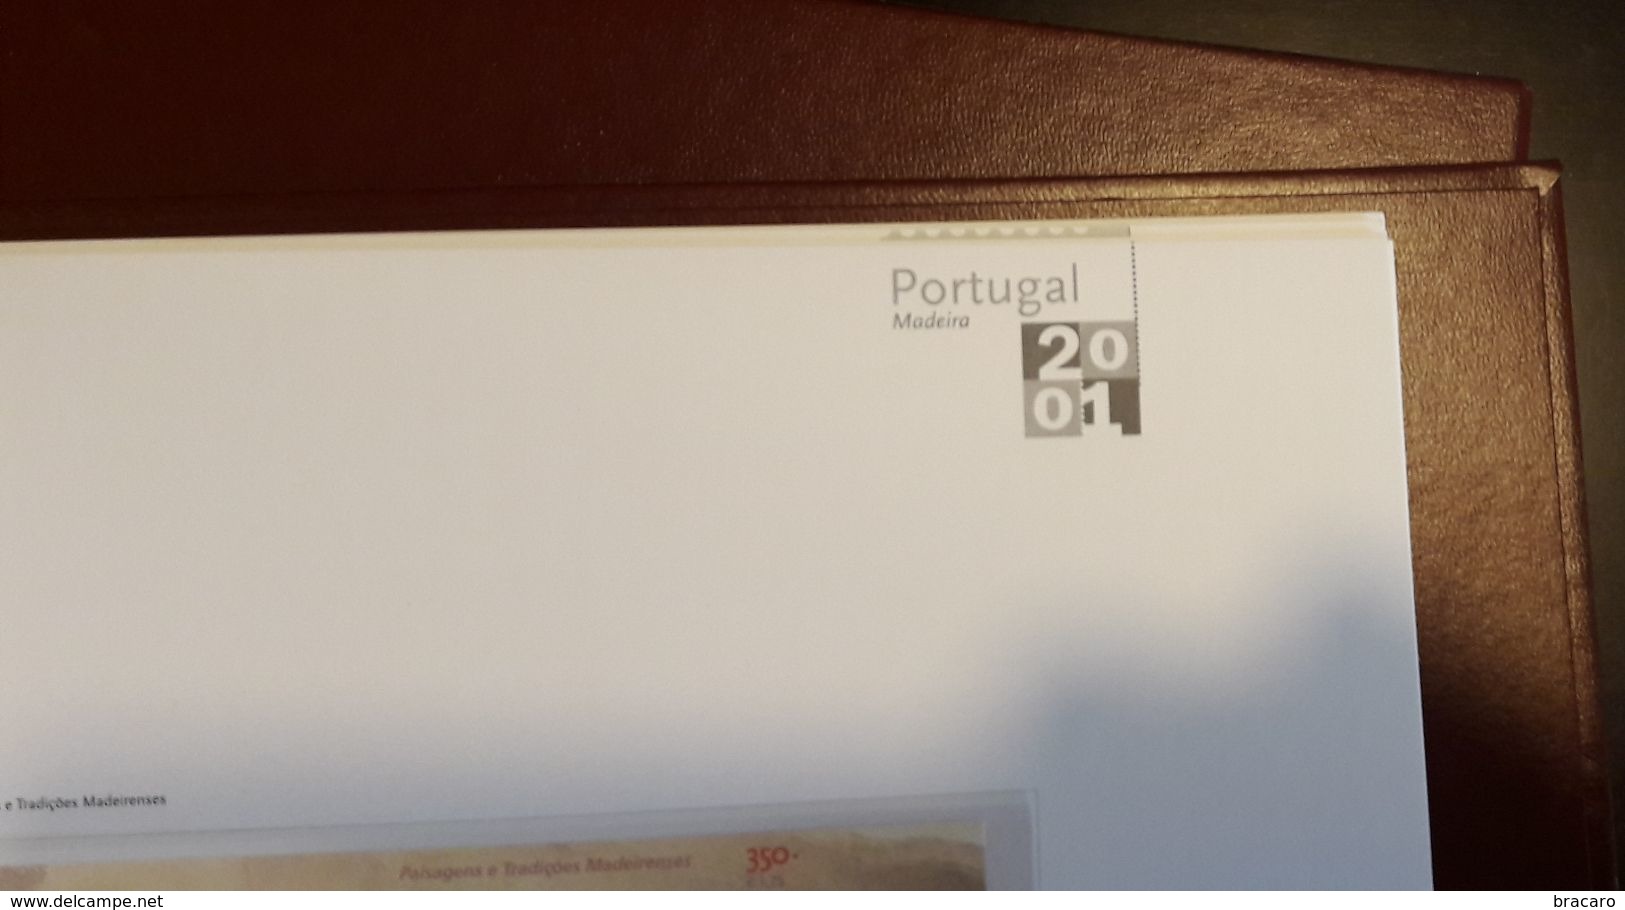 PORTUGAL - ÁLBUM FILATÉLICO - full year stamps + blocks + ATM / machine stamps + carnets + miniature sheets - MNH - 2001